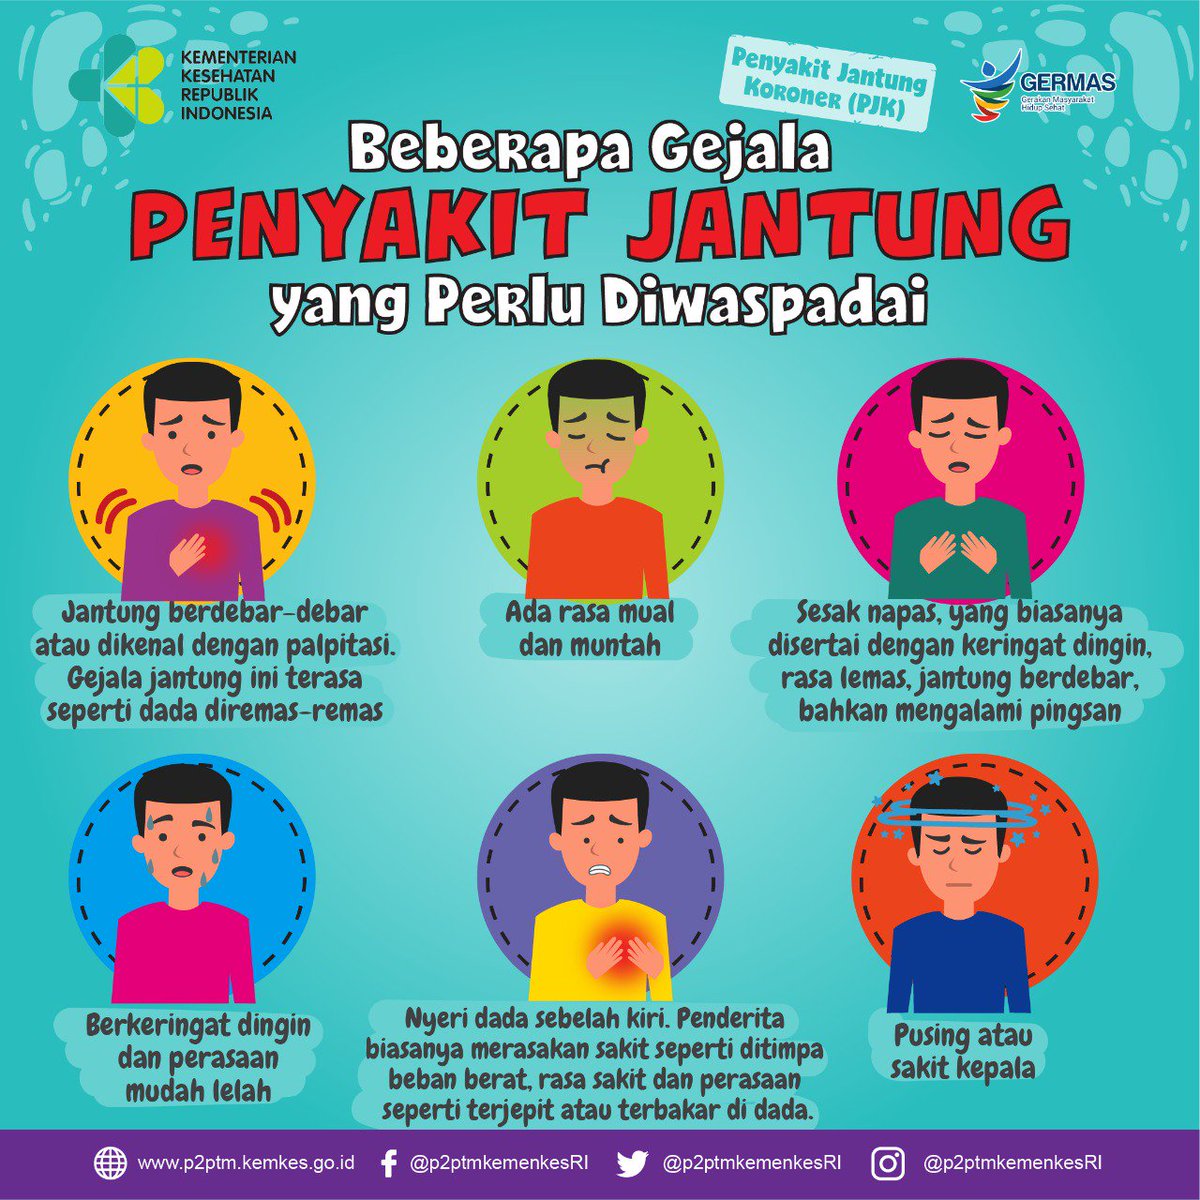 Dinas Kesehatan Kota Yogyakarta